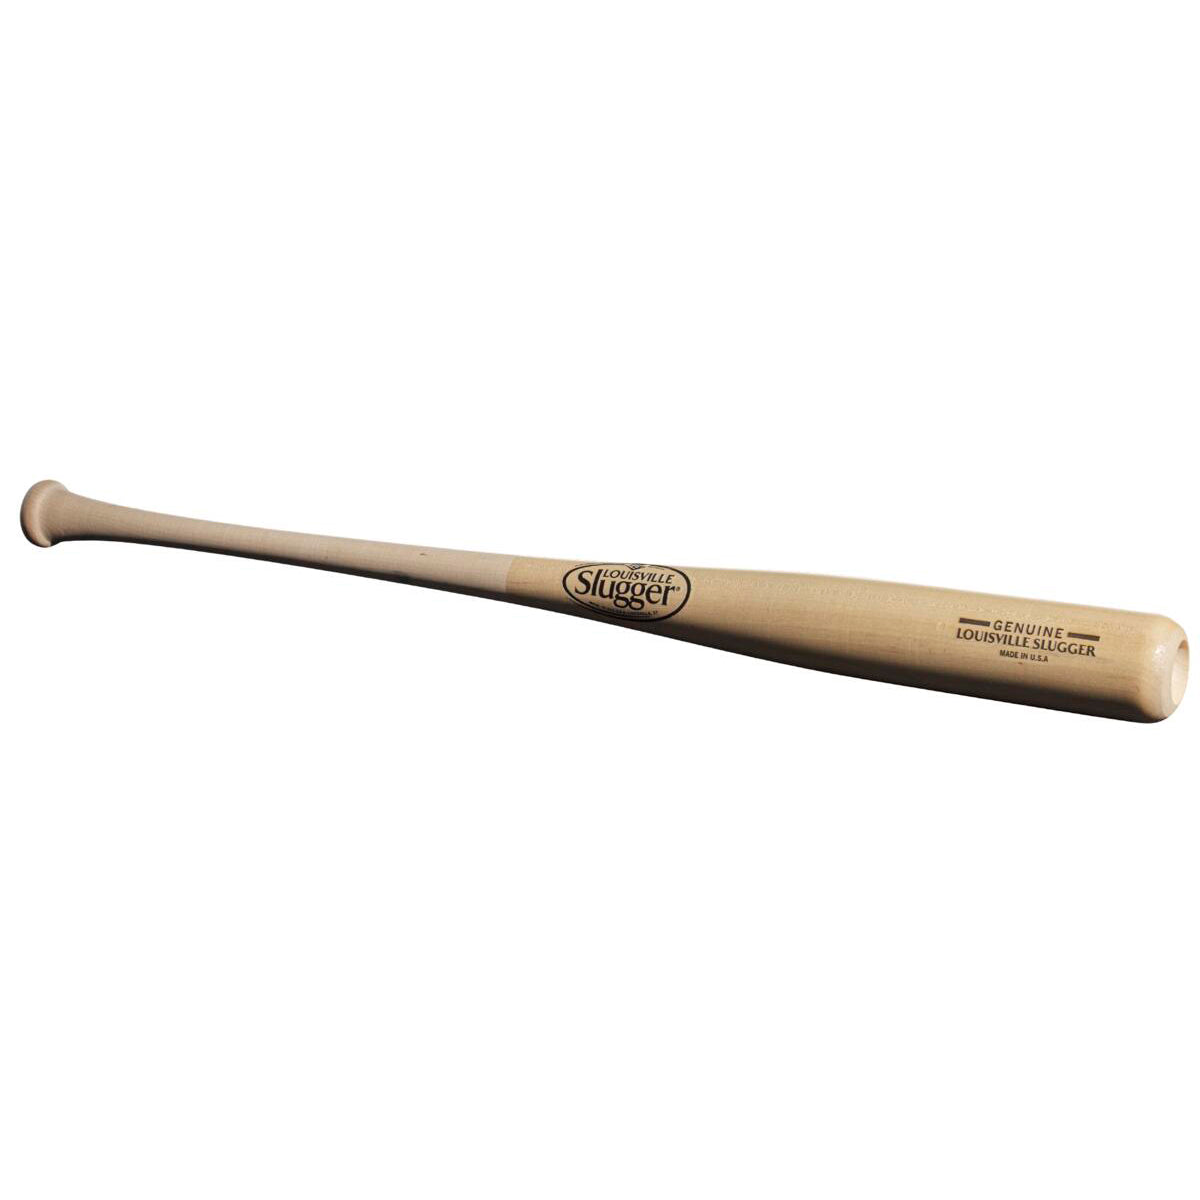 Louisville Slugger Genuine Mix Natural Wood Baseball Bat